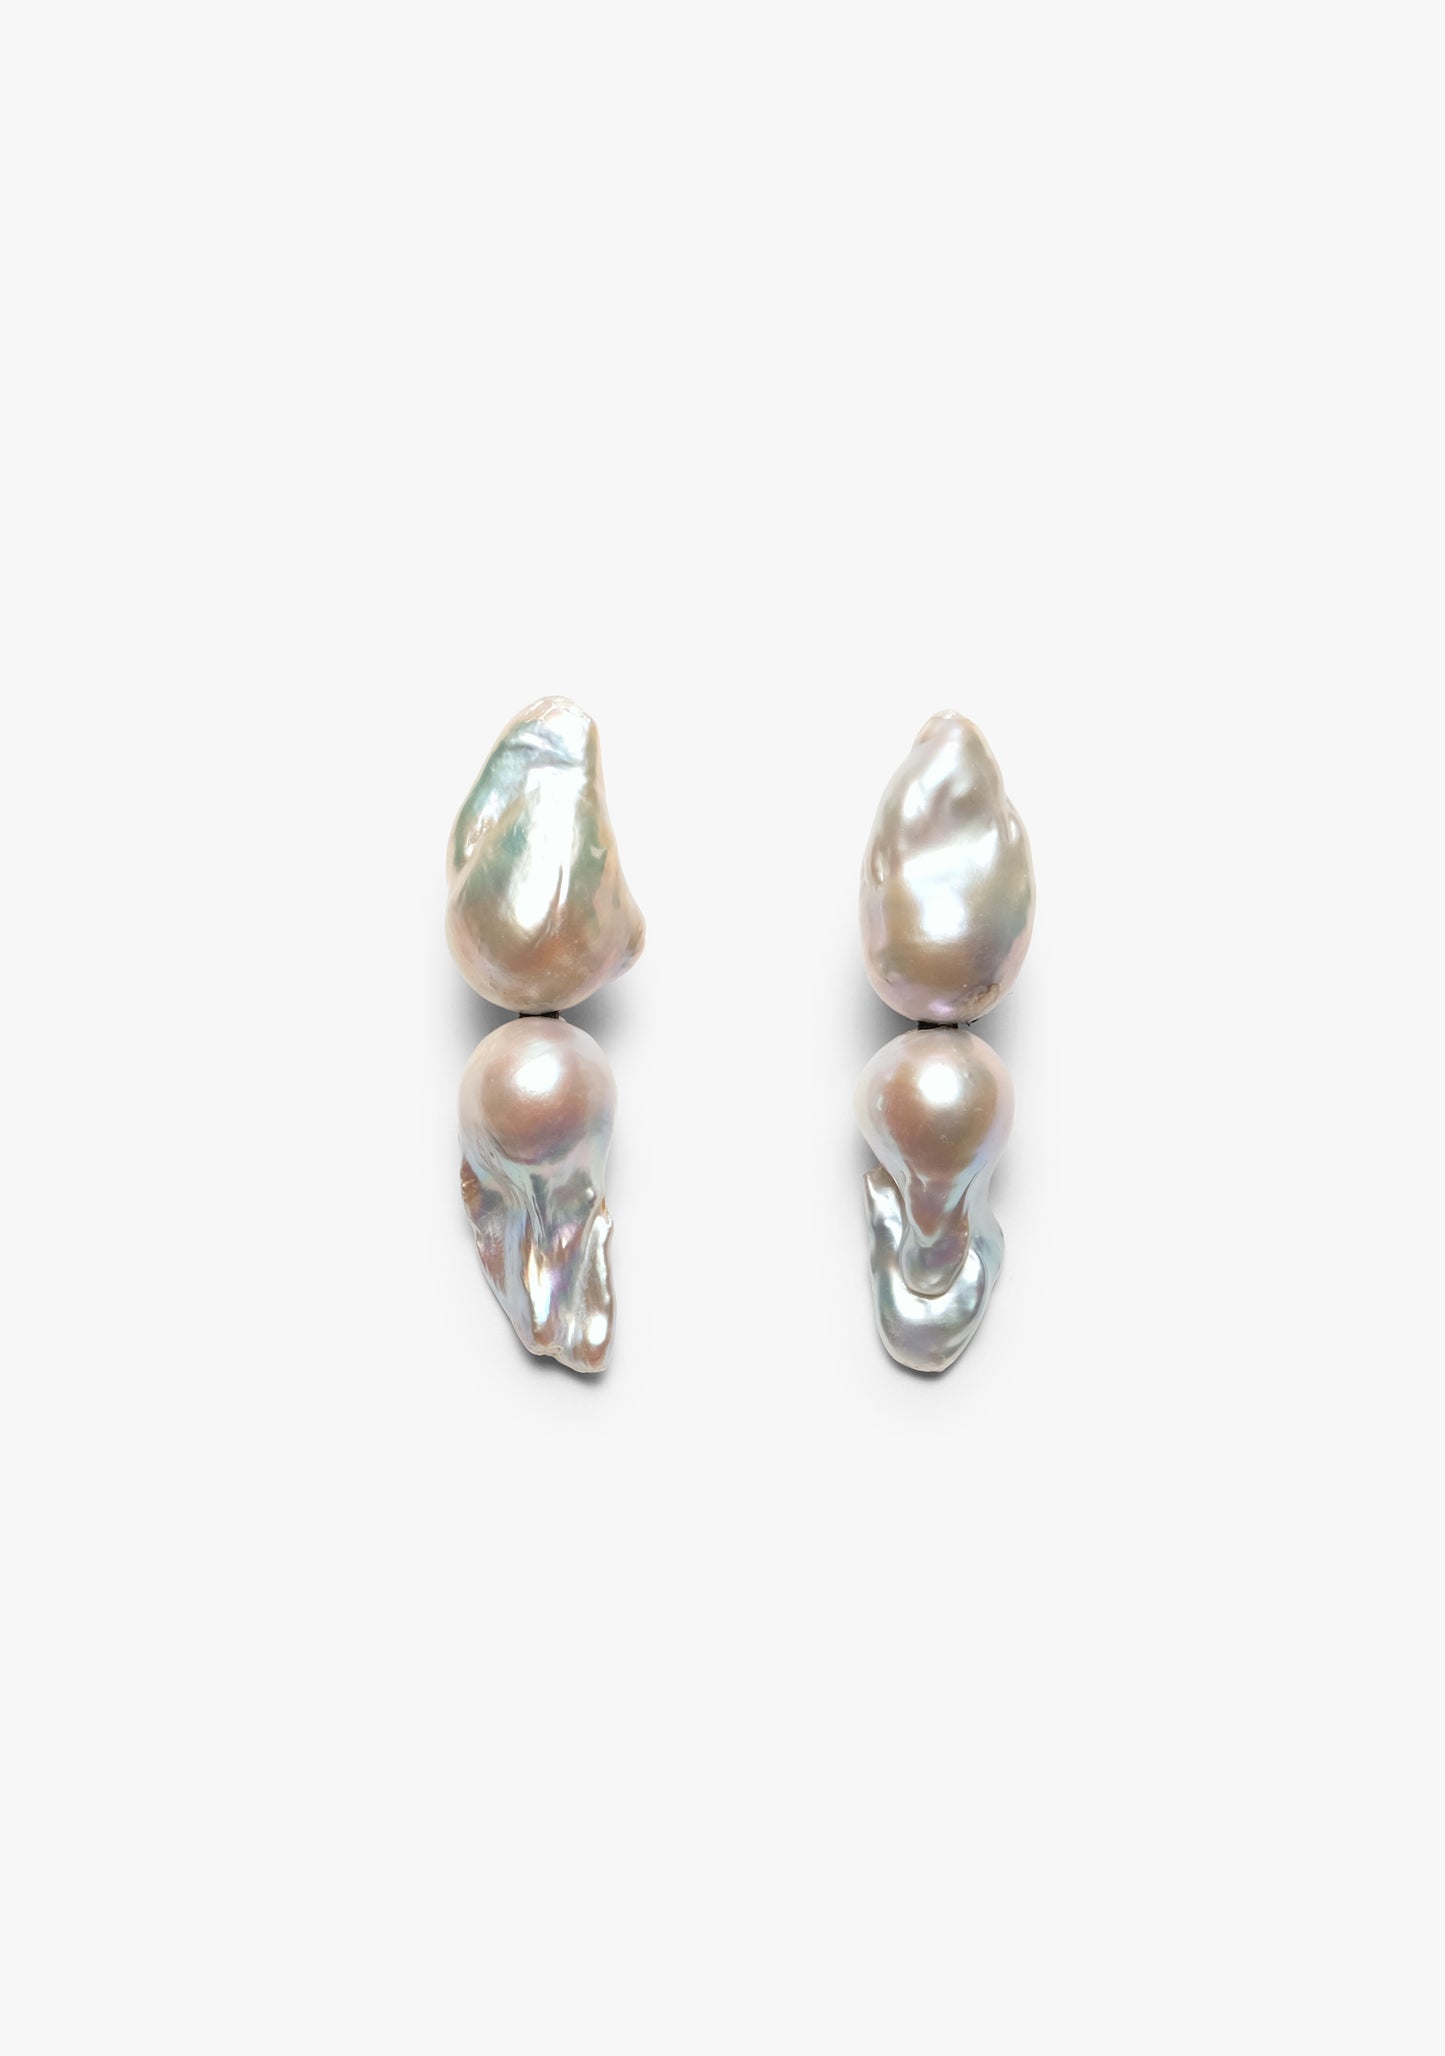 Mint earclips: double baroque pearls